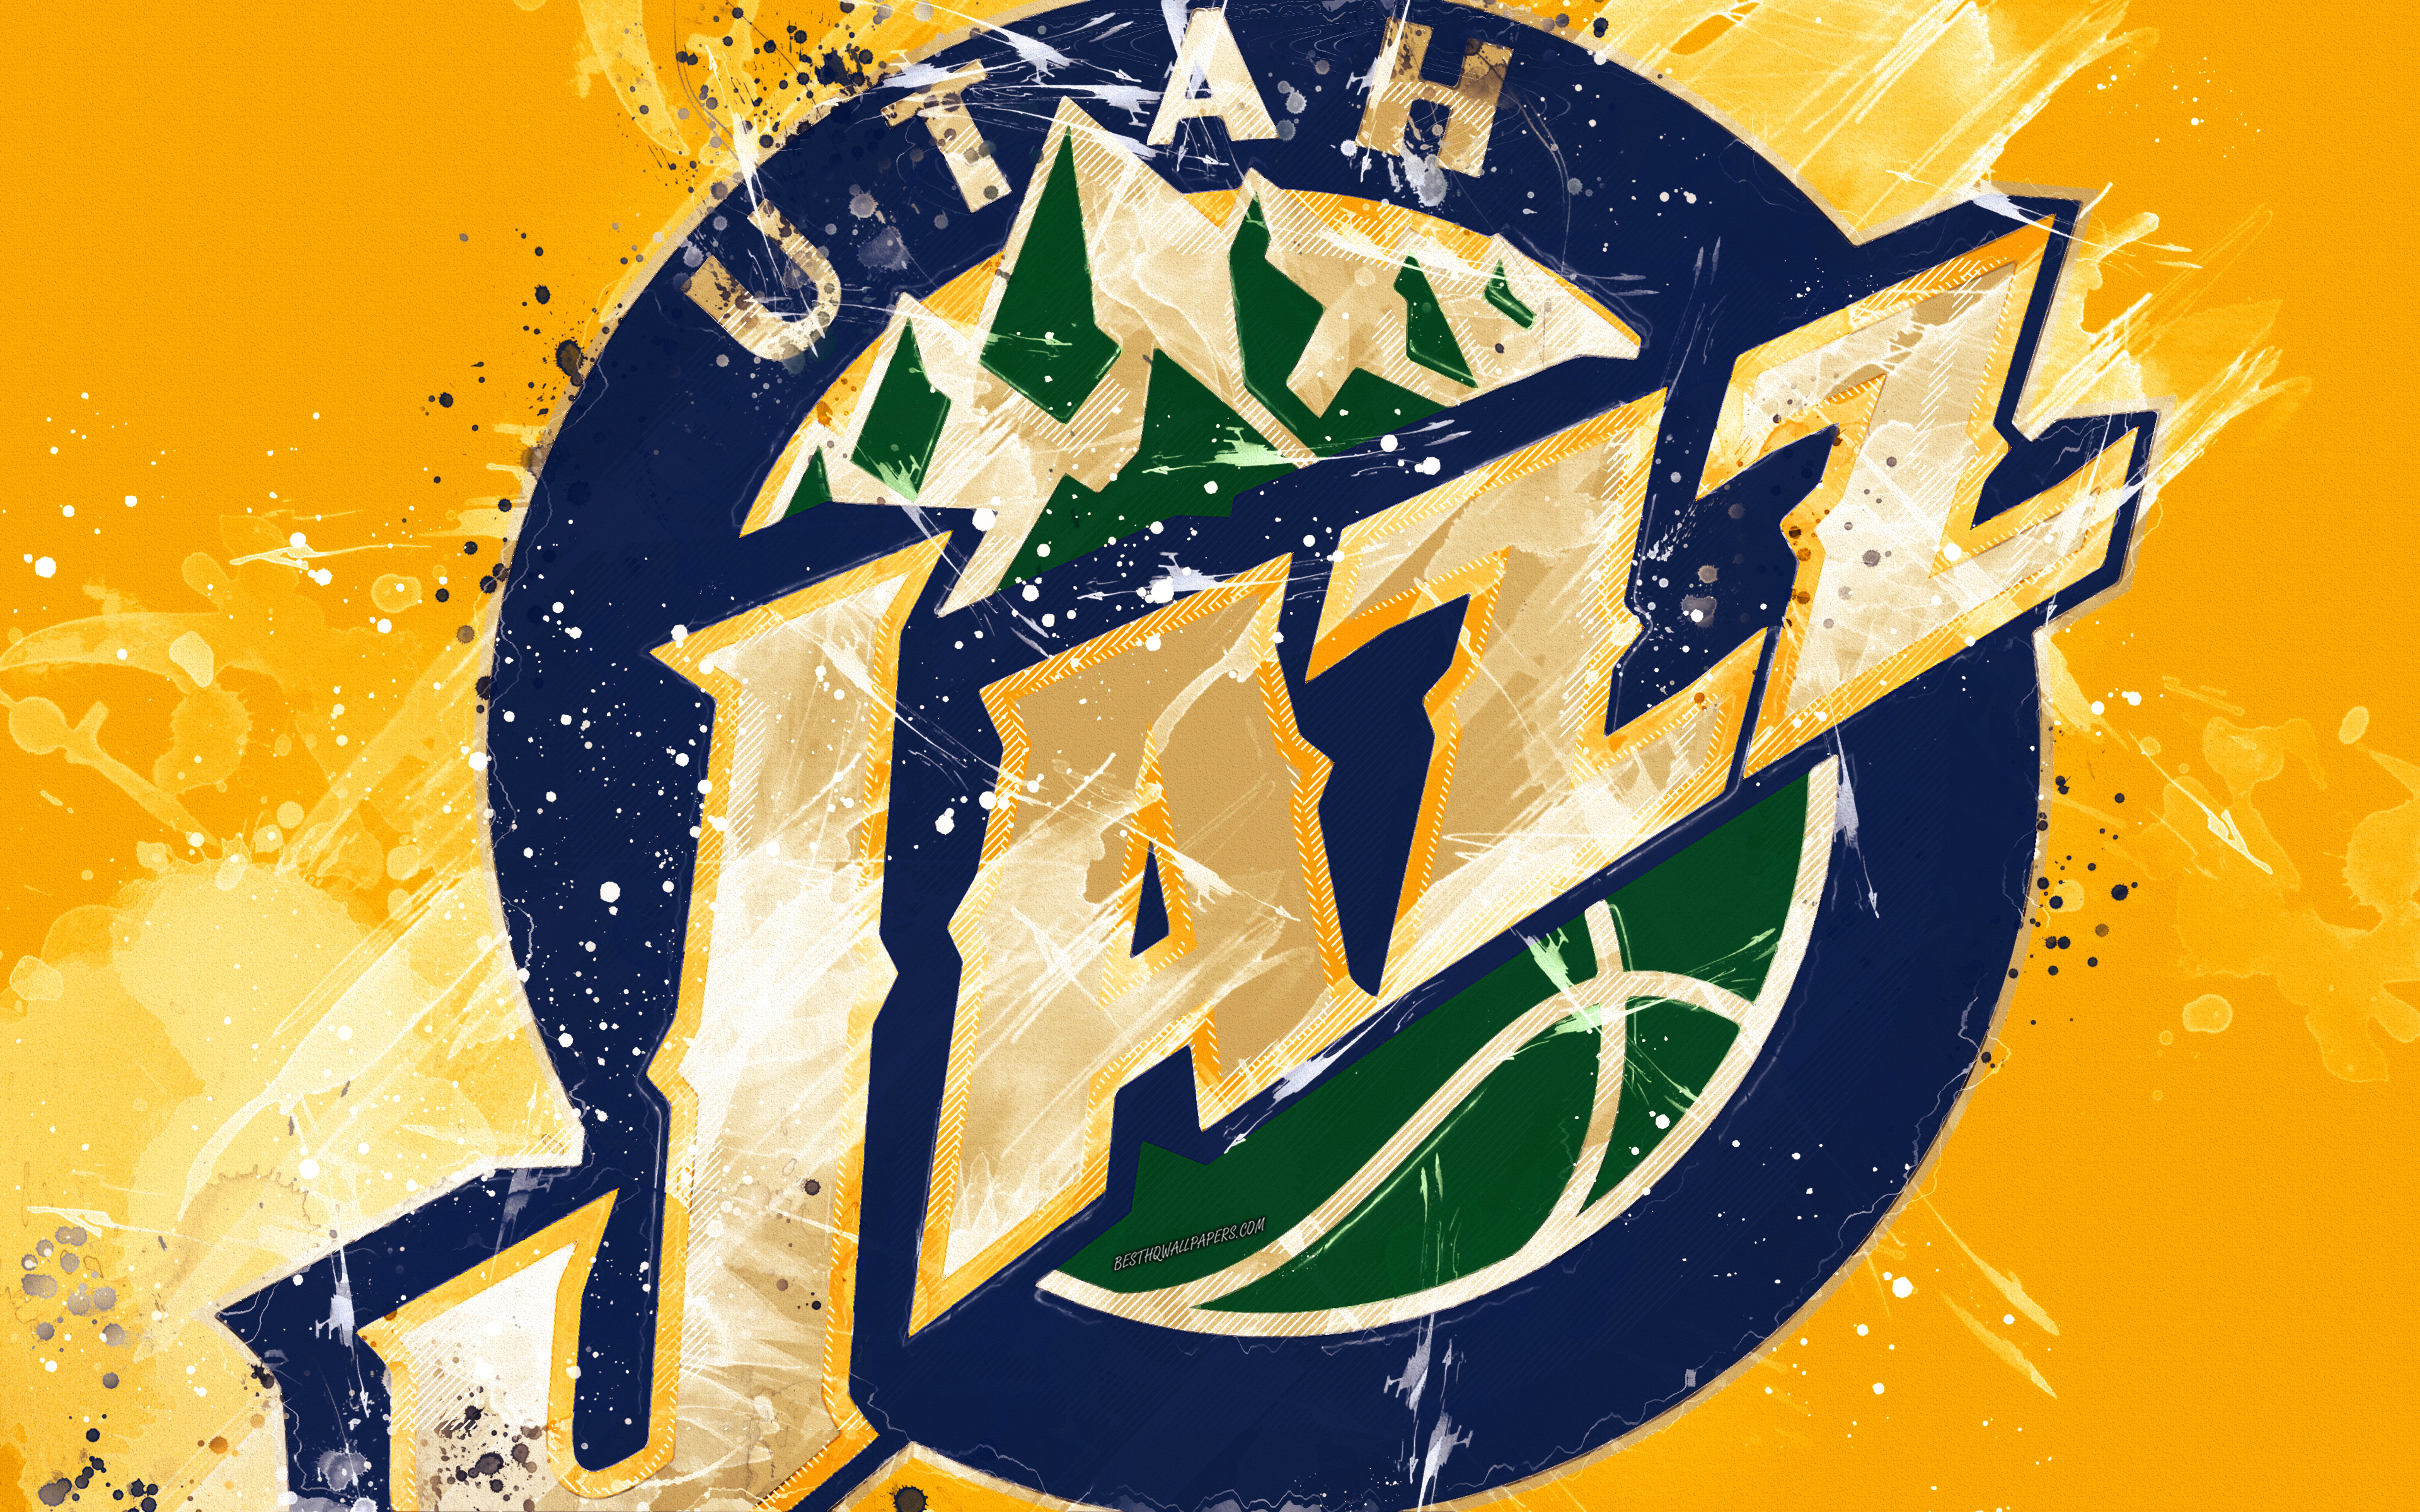 Descarga gratuita de fondo de pantalla para móvil de Baloncesto, Logo, Nba, Deporte, Jazz De Utah.